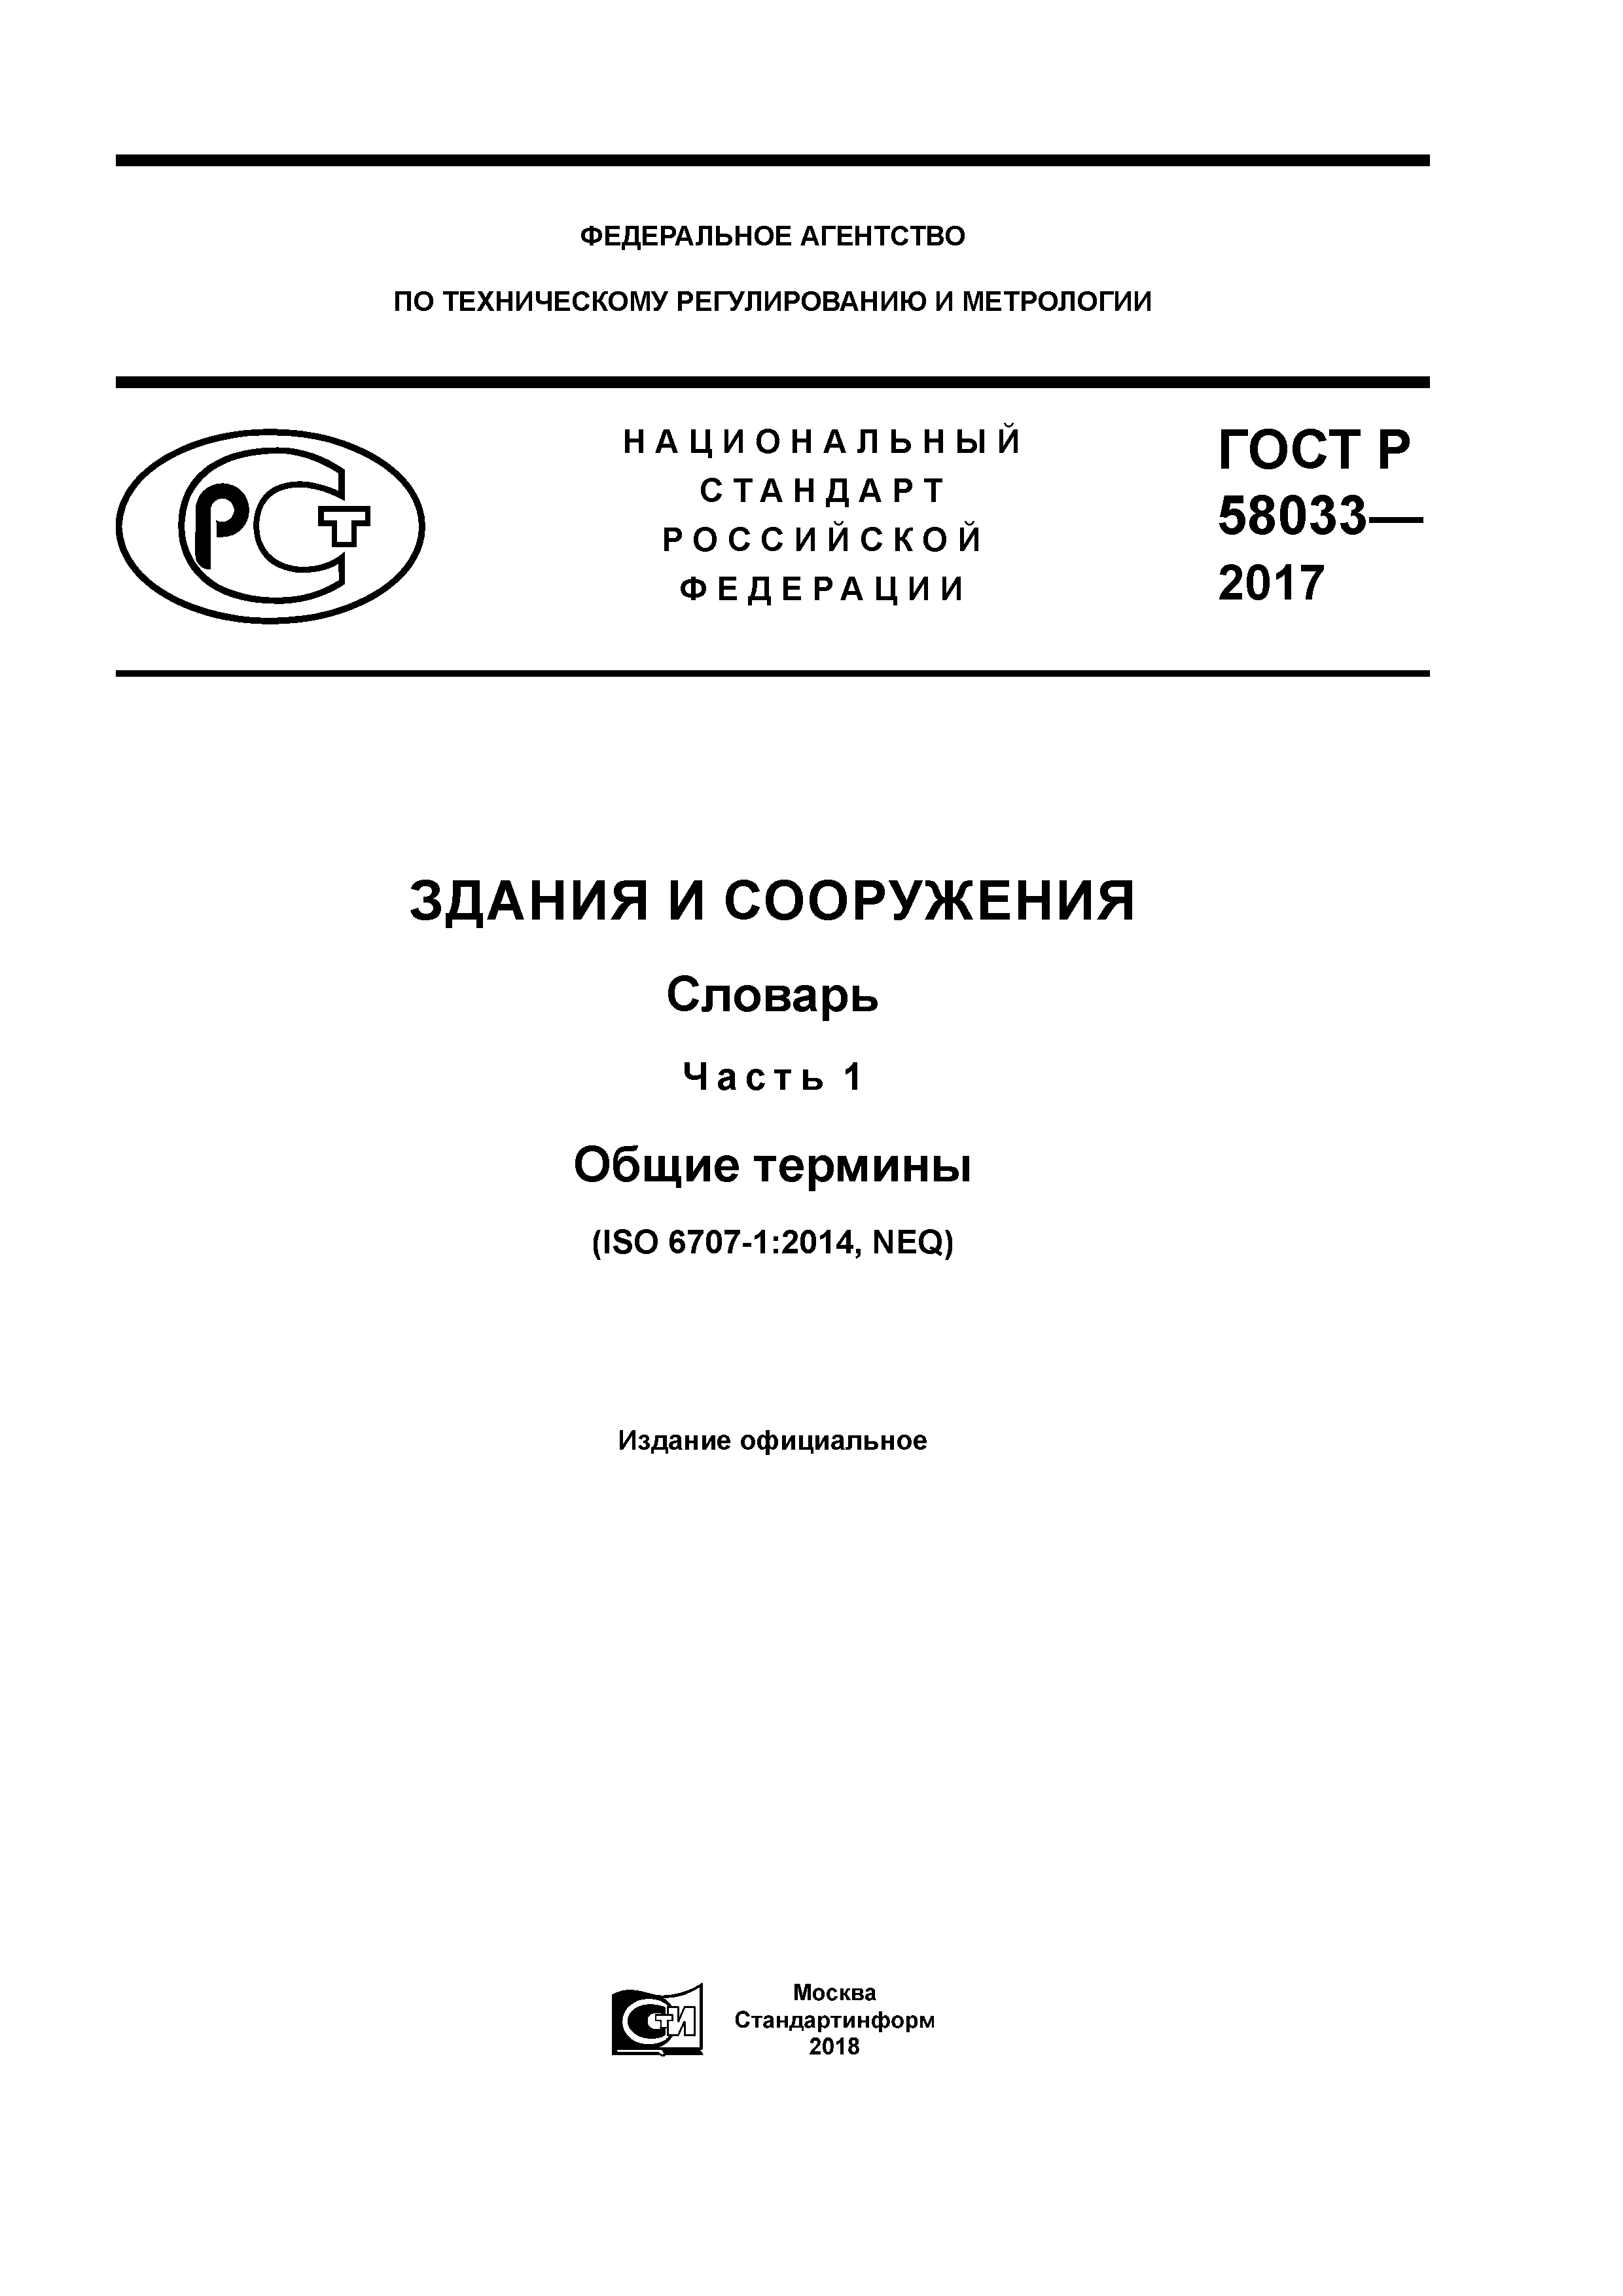 ГОСТ Р 58033-2017